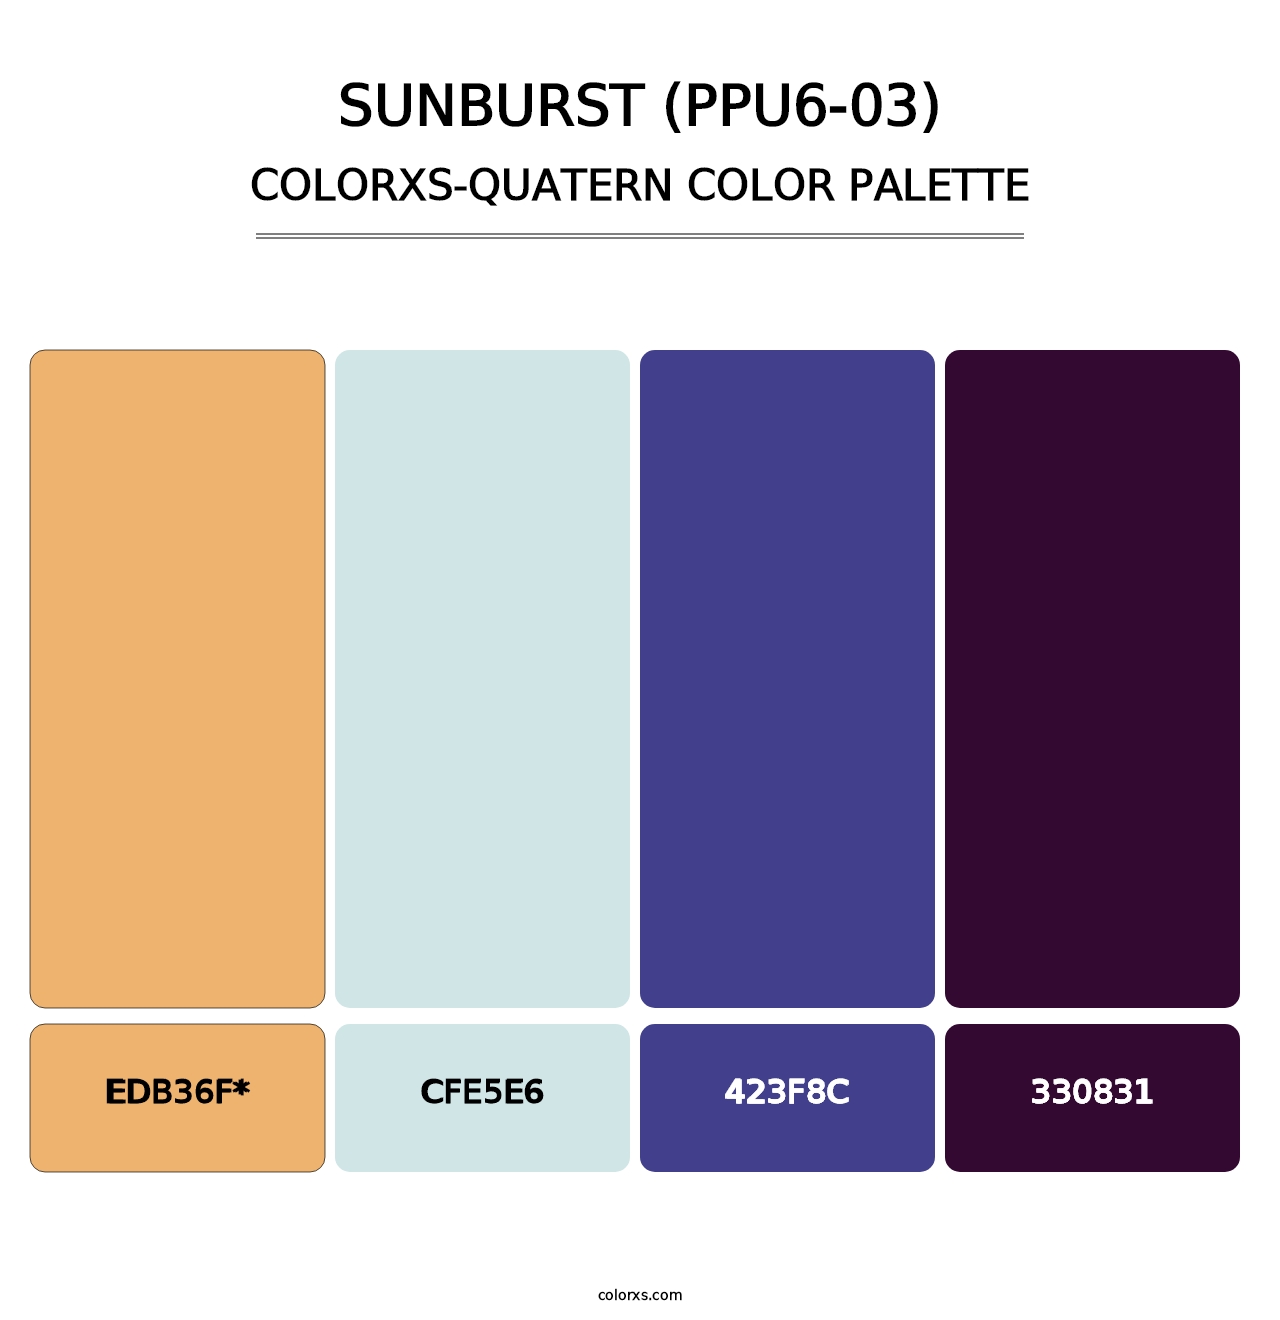 Sunburst (PPU6-03) - Colorxs Quatern Palette